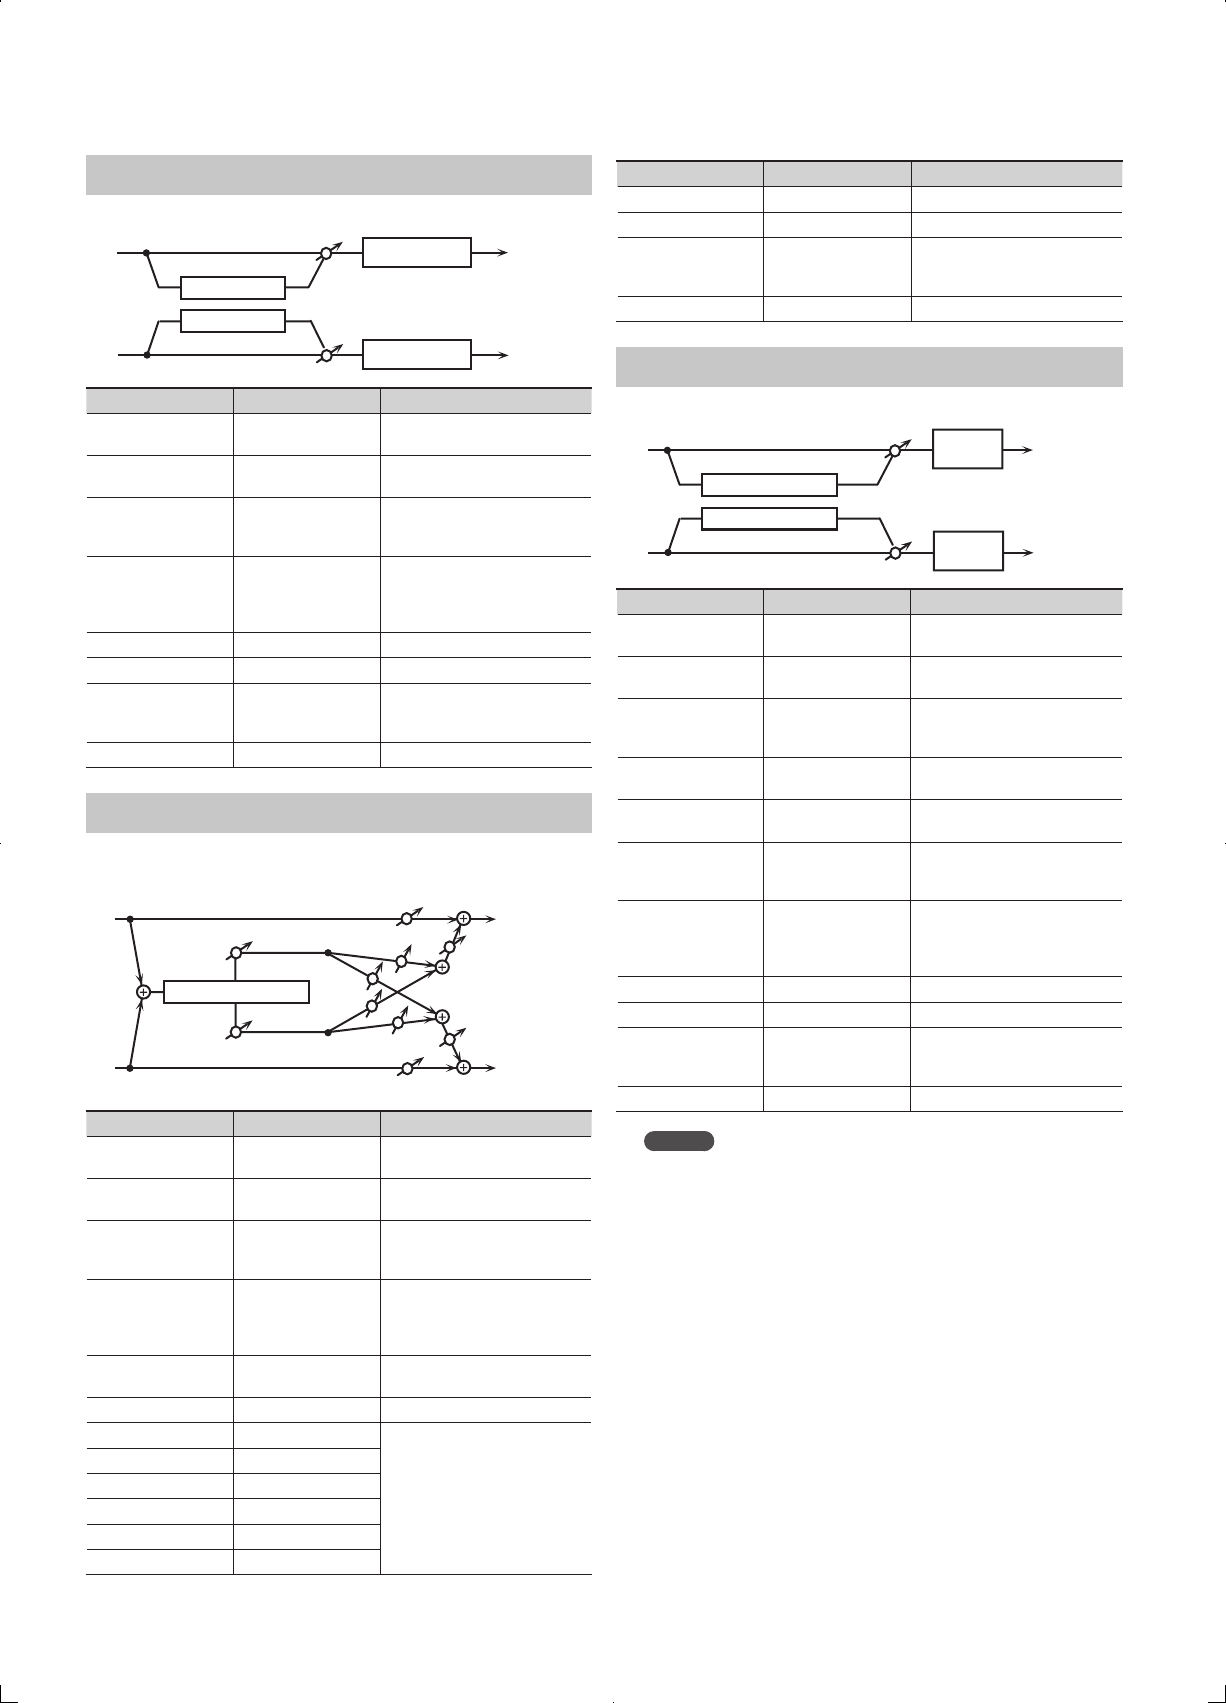 Diagram Guitar Wiring Roland Juno Signal Path from usermanual.wiki